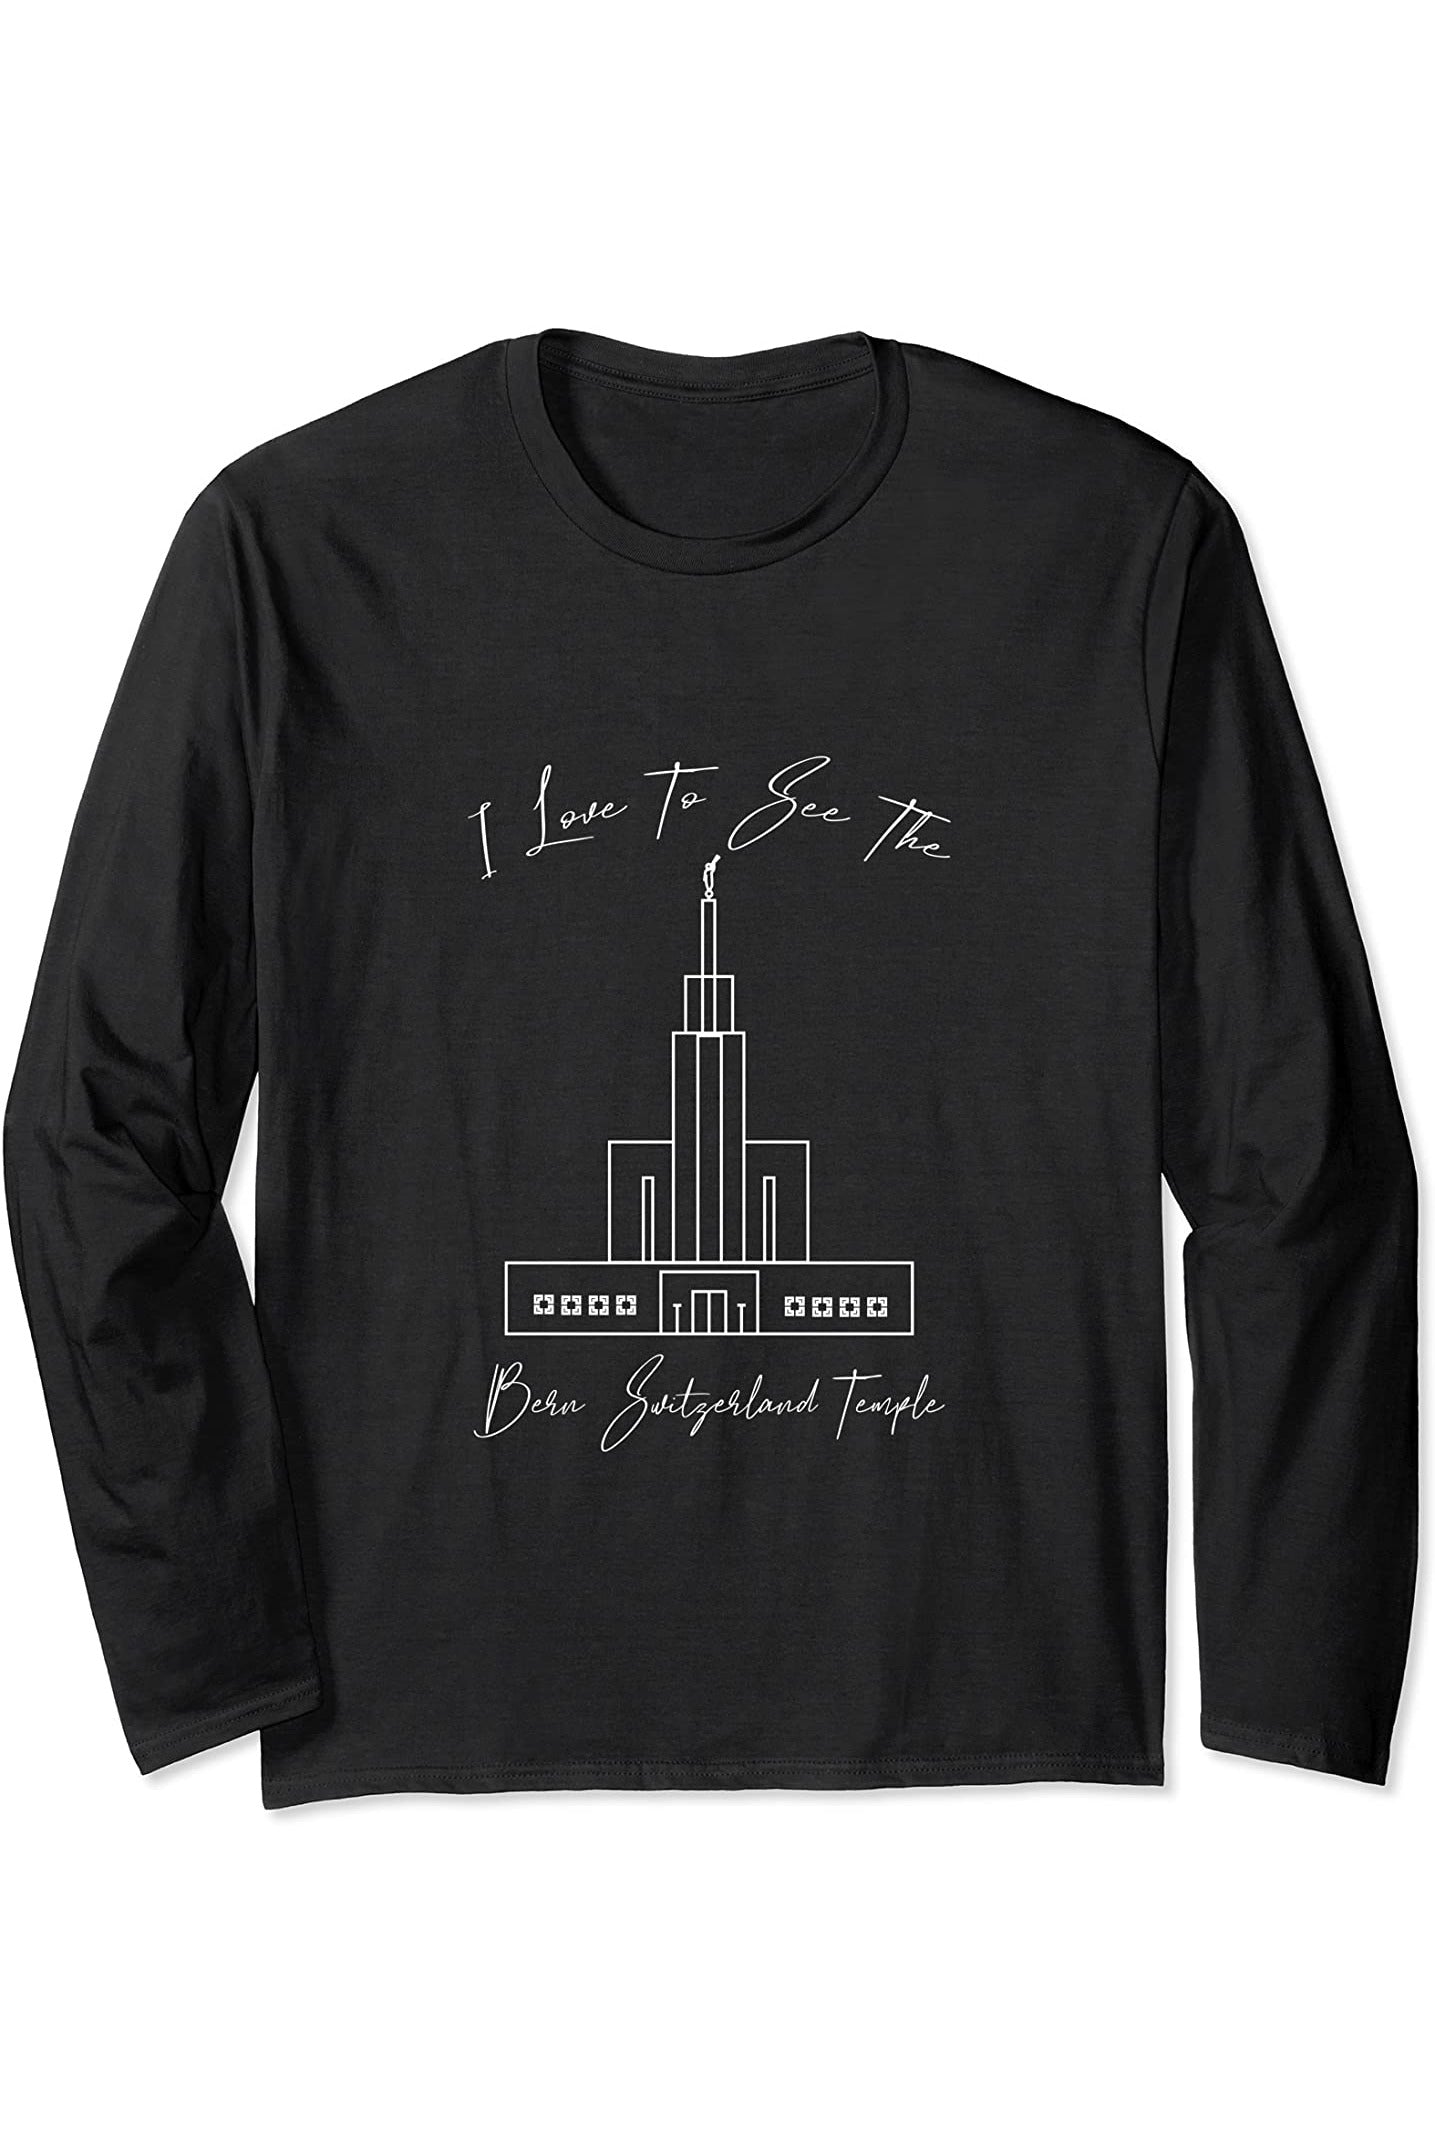 Bern Switzerland Temple Long Sleeve T-Shirt - Calligraphy Style (English) US